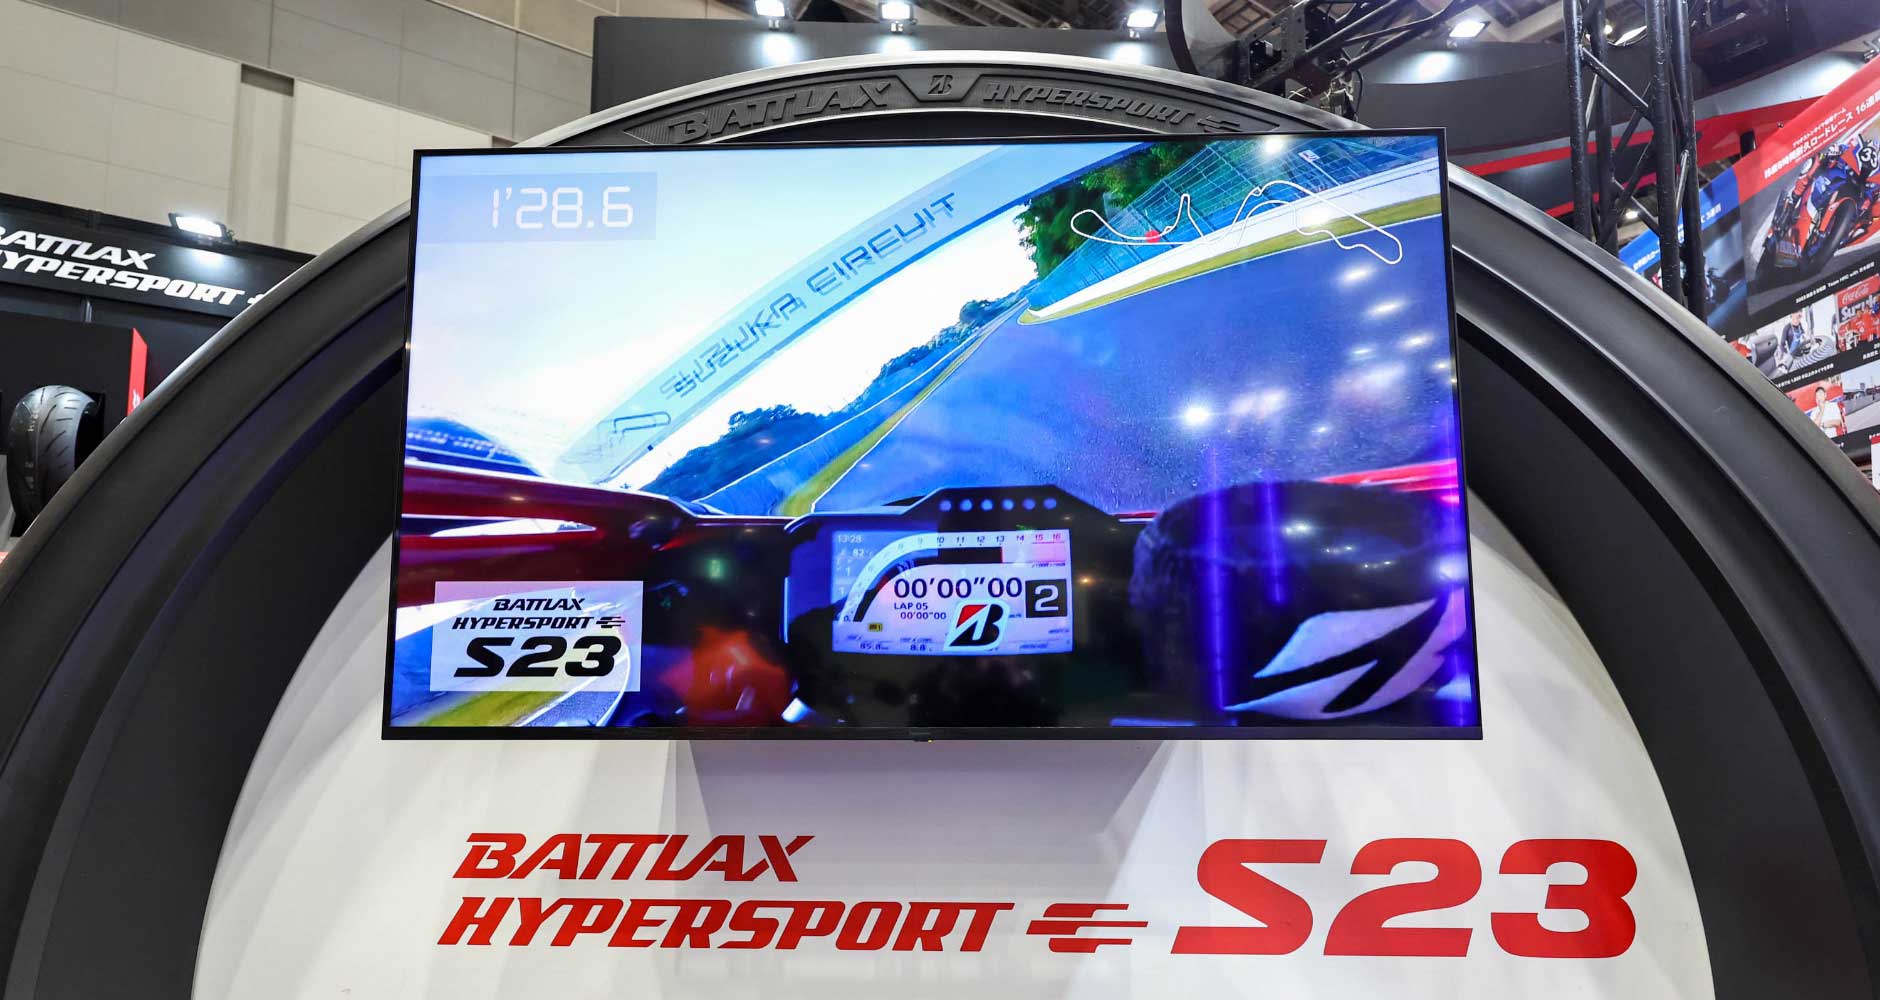 BATTLAX From Bridgestone Motorsport